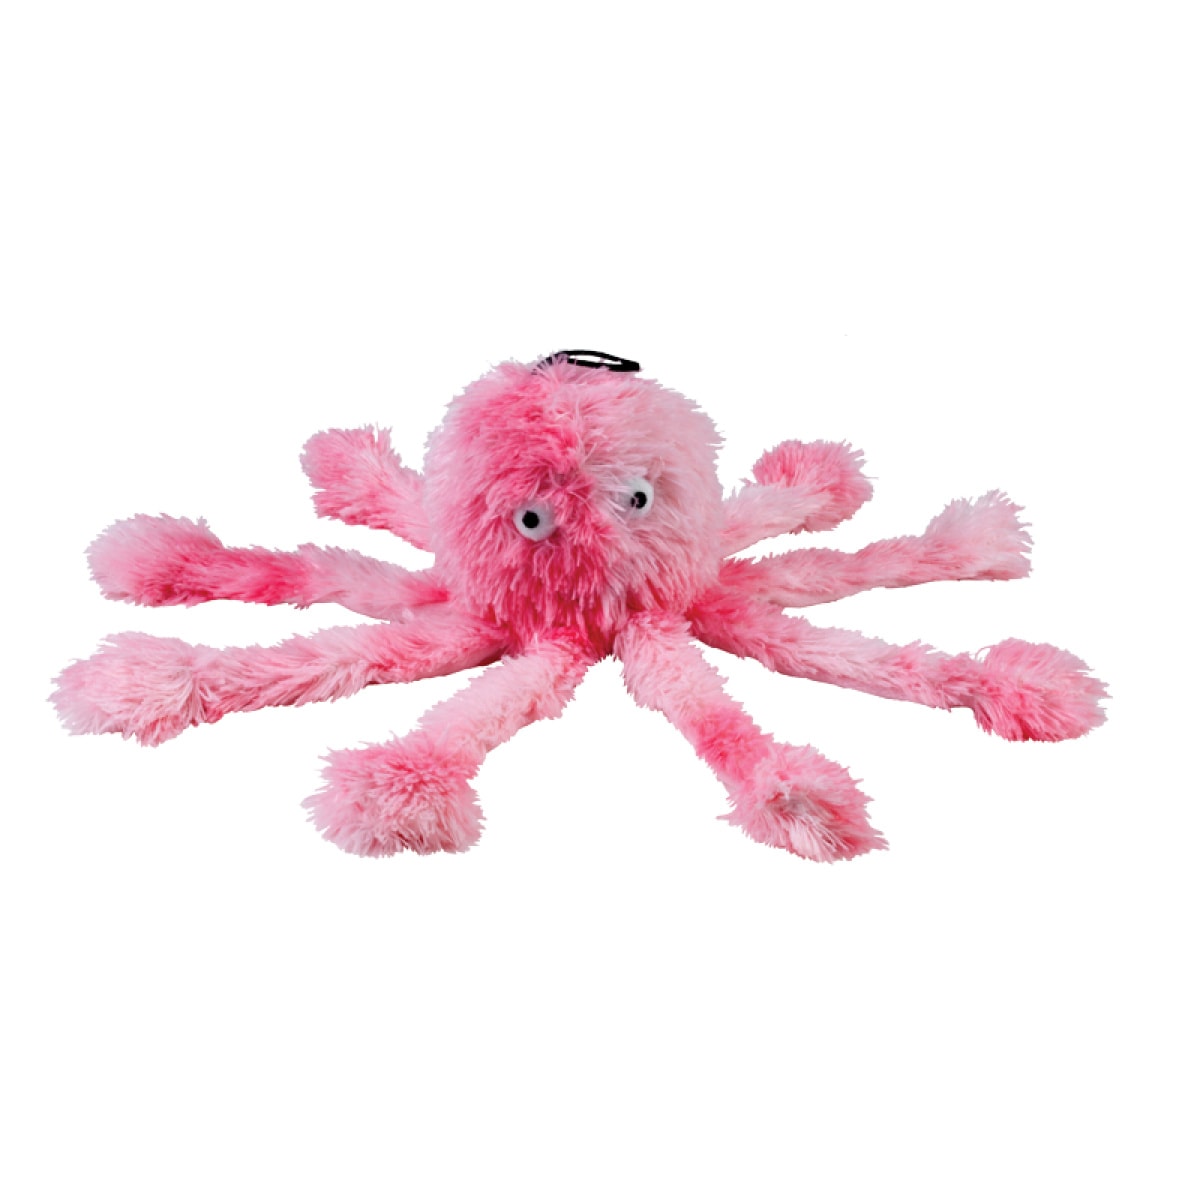 Gor Reef - Octopus Main Image